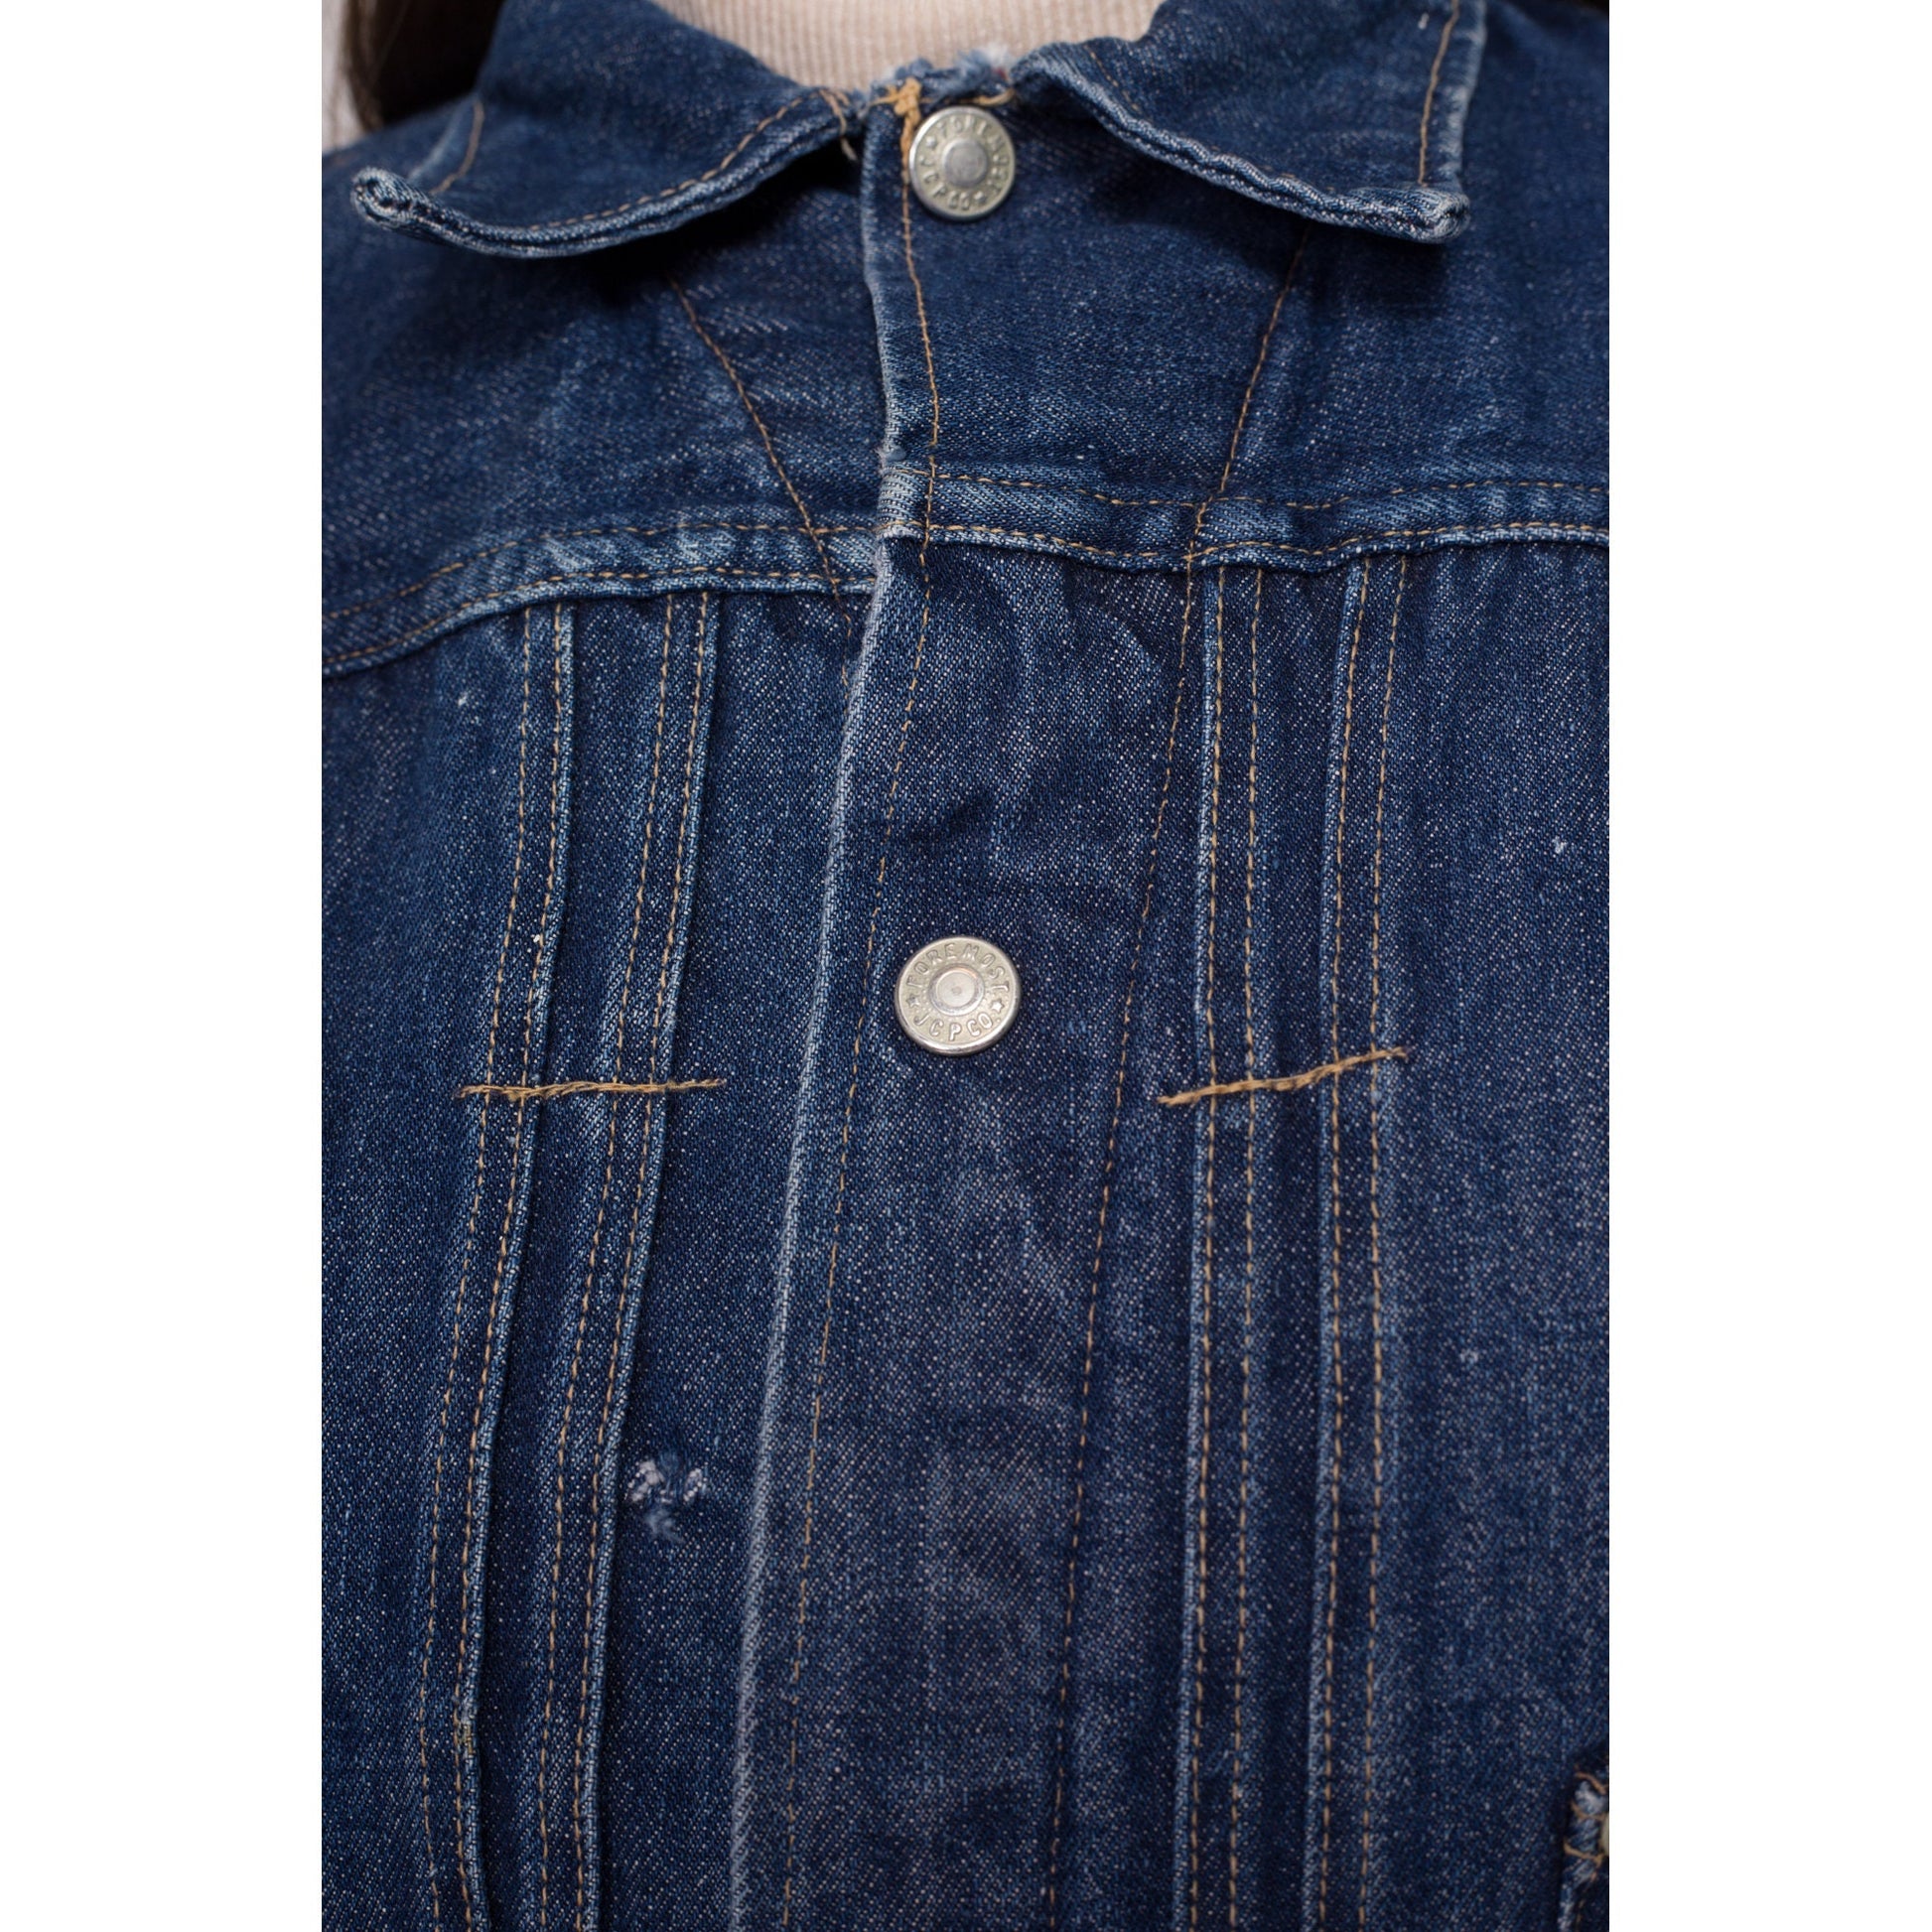 XS Vintage 50s JC Penney Foremost Selvedge Blanket Lined Jean Jacket | Rare 1950s Type 2 Dark Wash Denim Cropped Jacket